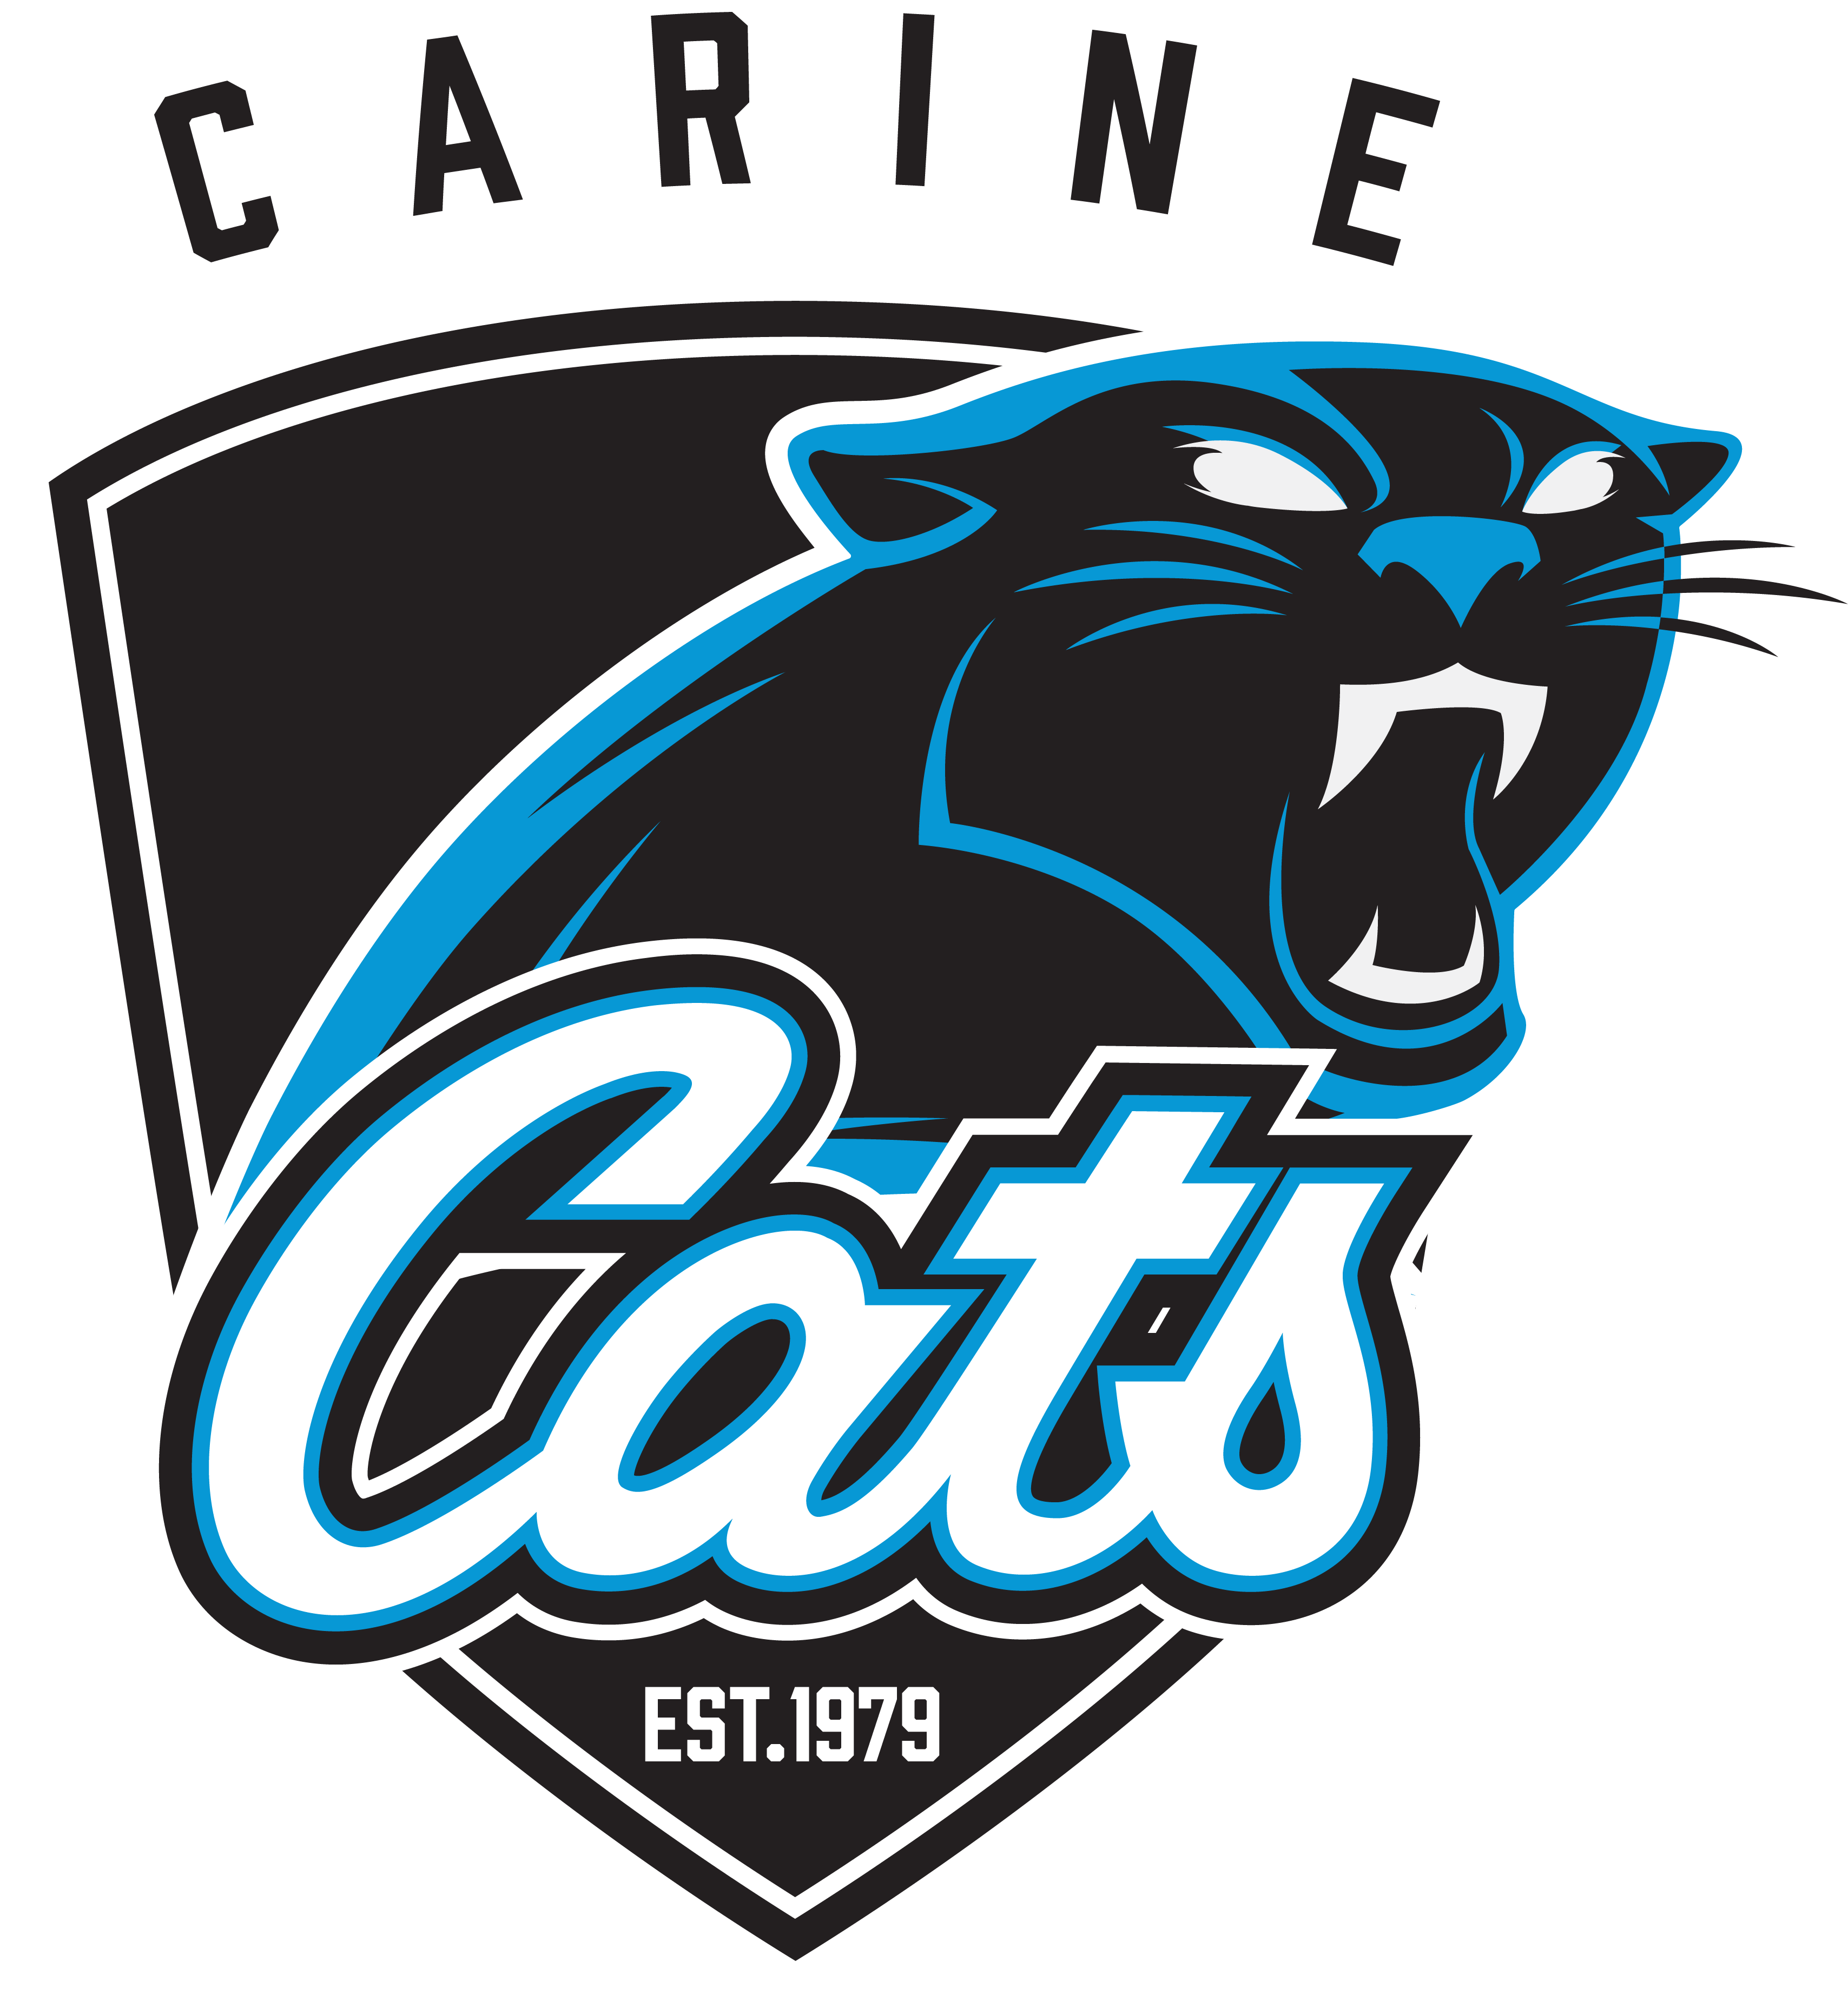 Carine Cats Ball Club Inc